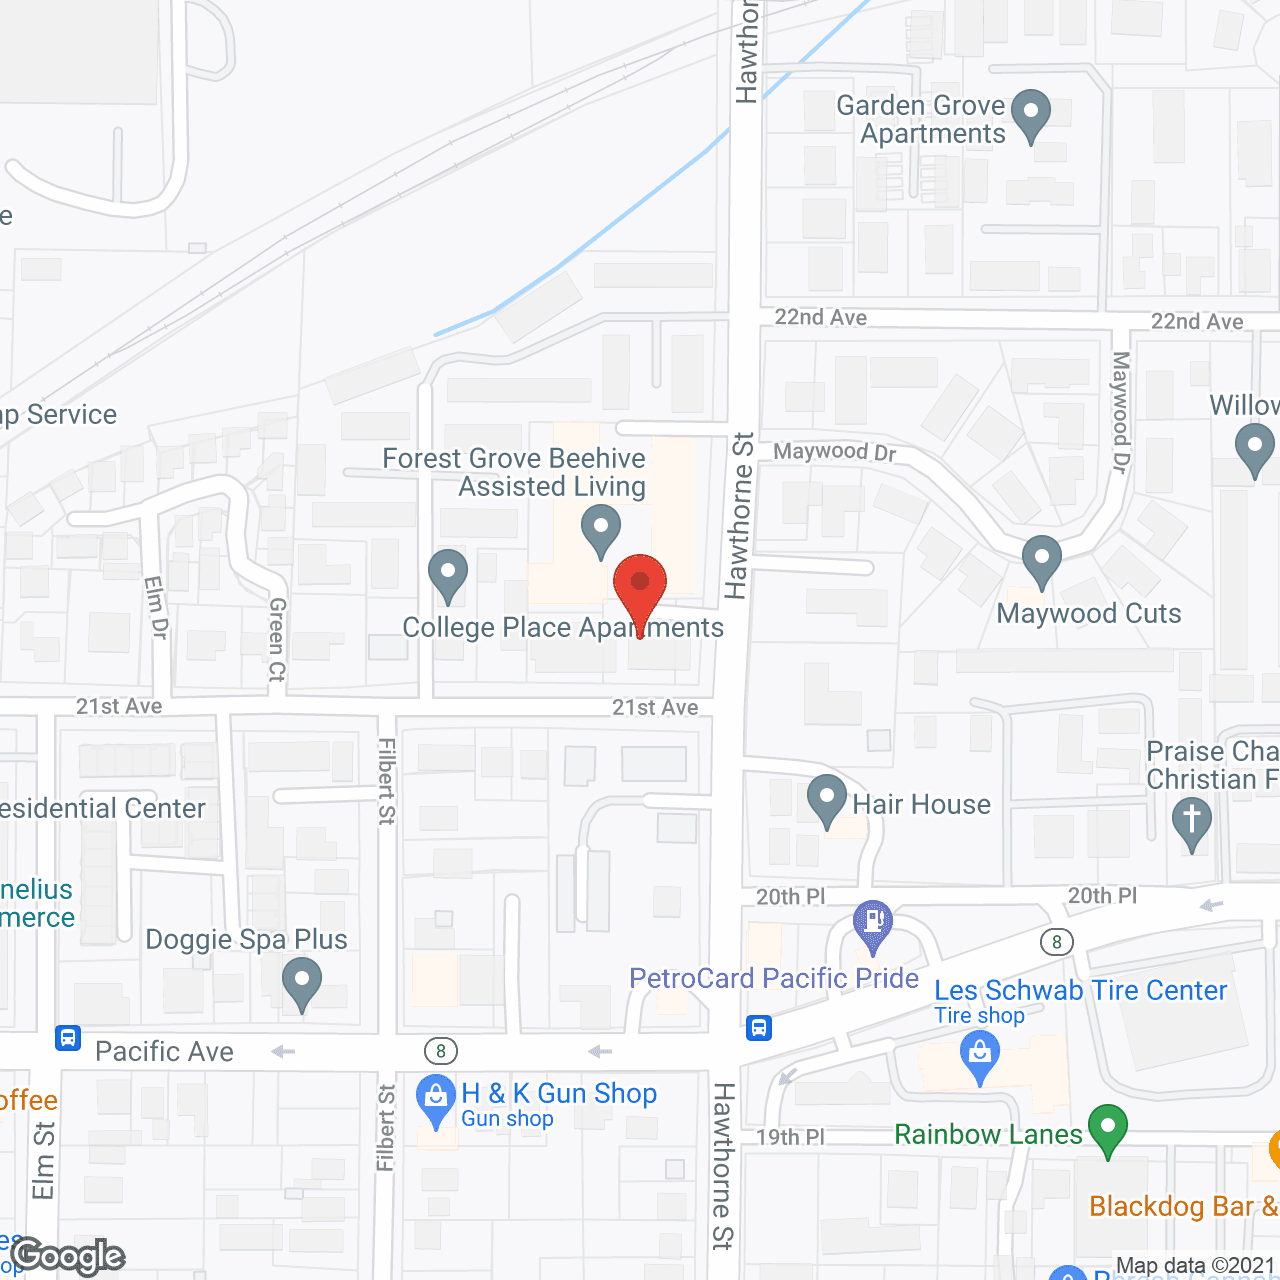 Hawthorne House in google map